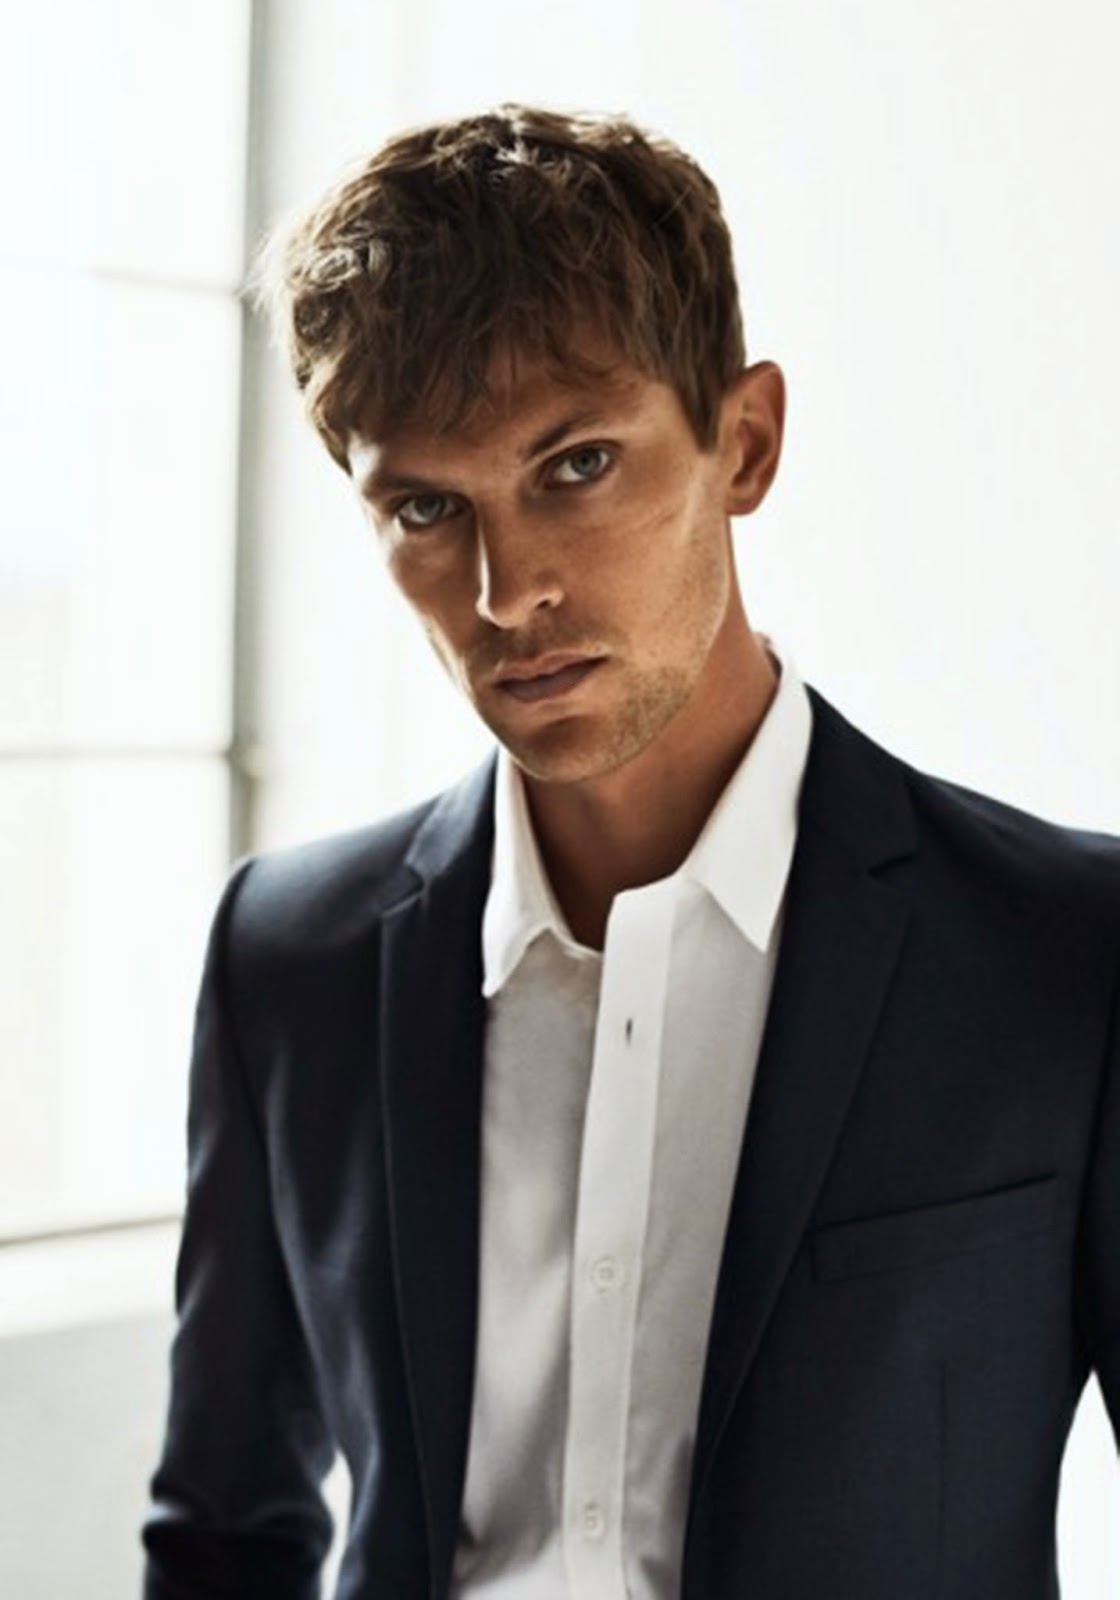 Mathias Lauridsen Models Easy Contemporary Styles for Jack & Jones